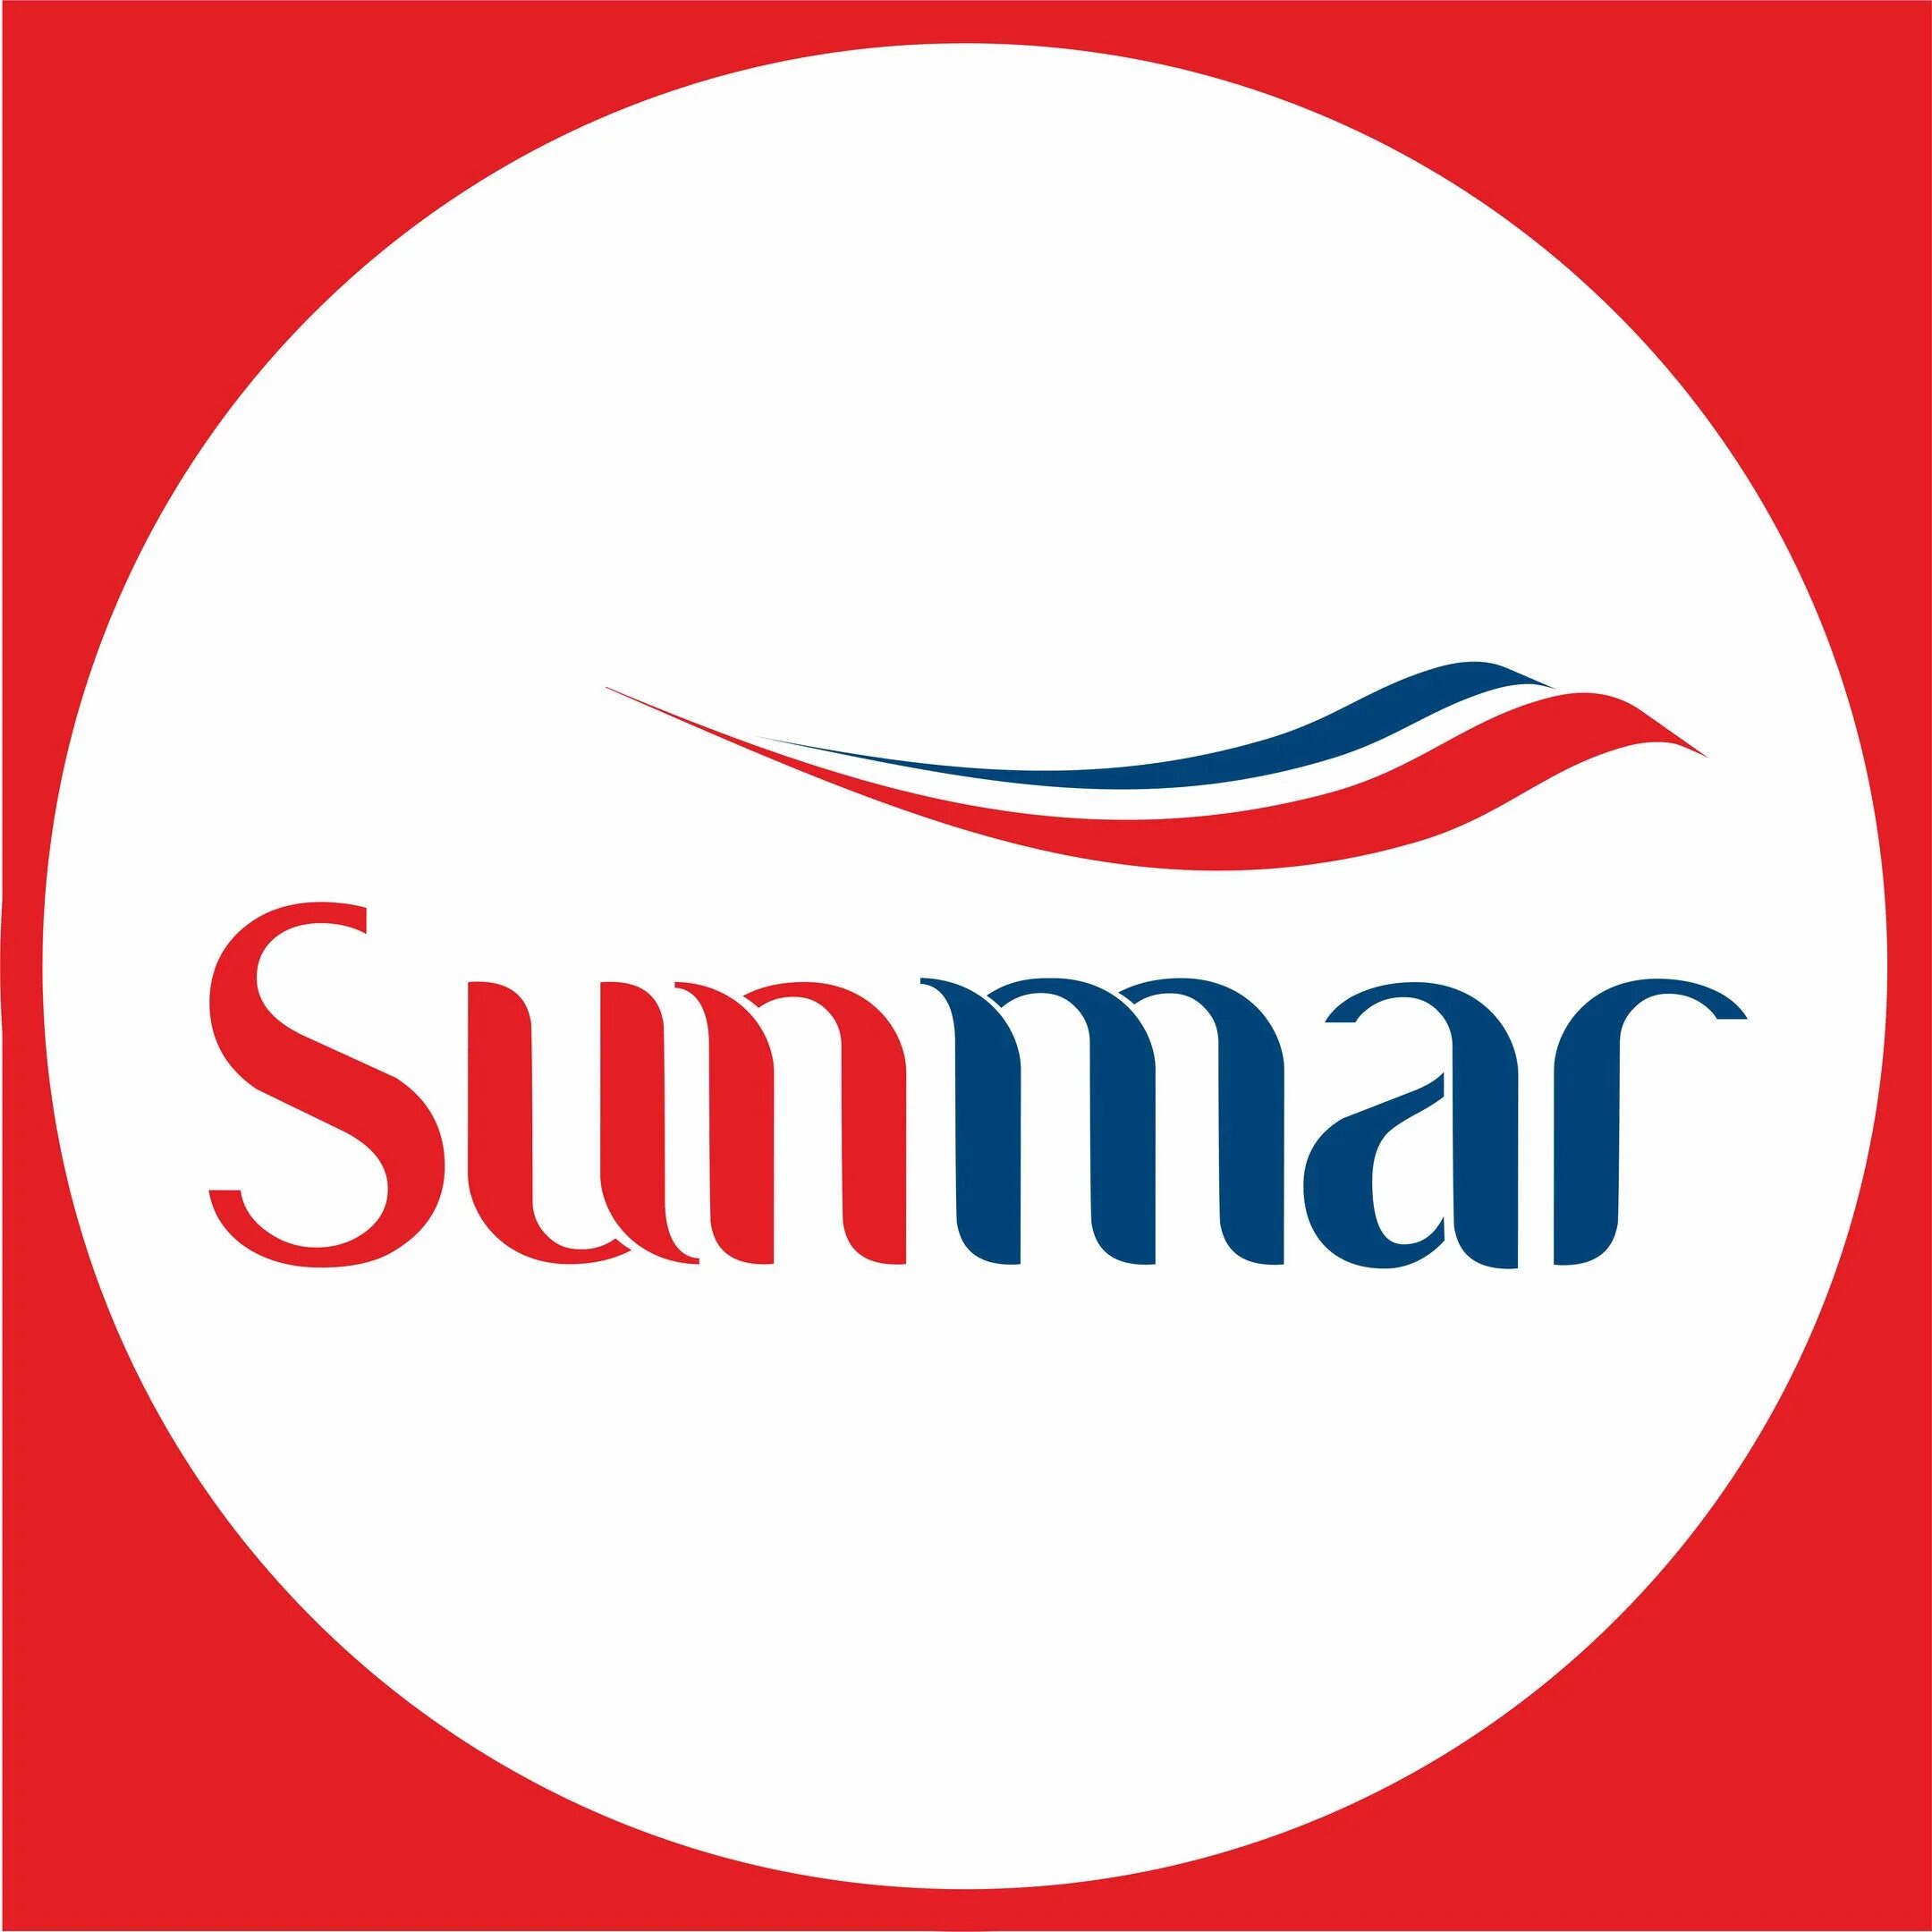 Www sunmar ru. Sunm. САНМАР лого. Турагентство Sunmar. Sunmar туроператор логотип.